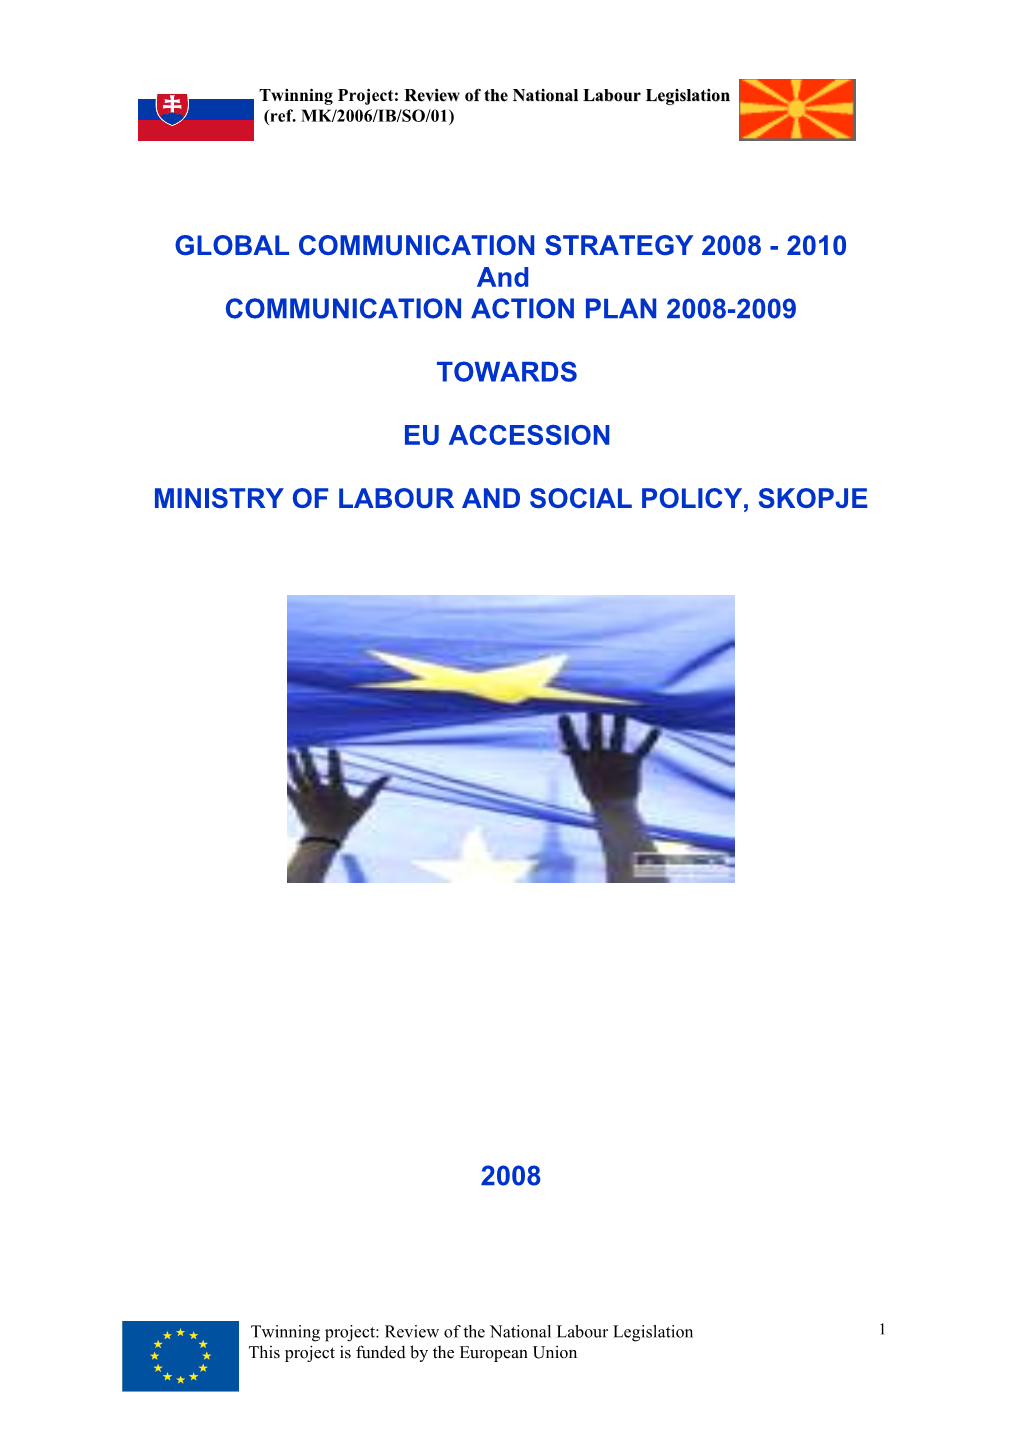 Global Communication Strategy 2008 - 2010